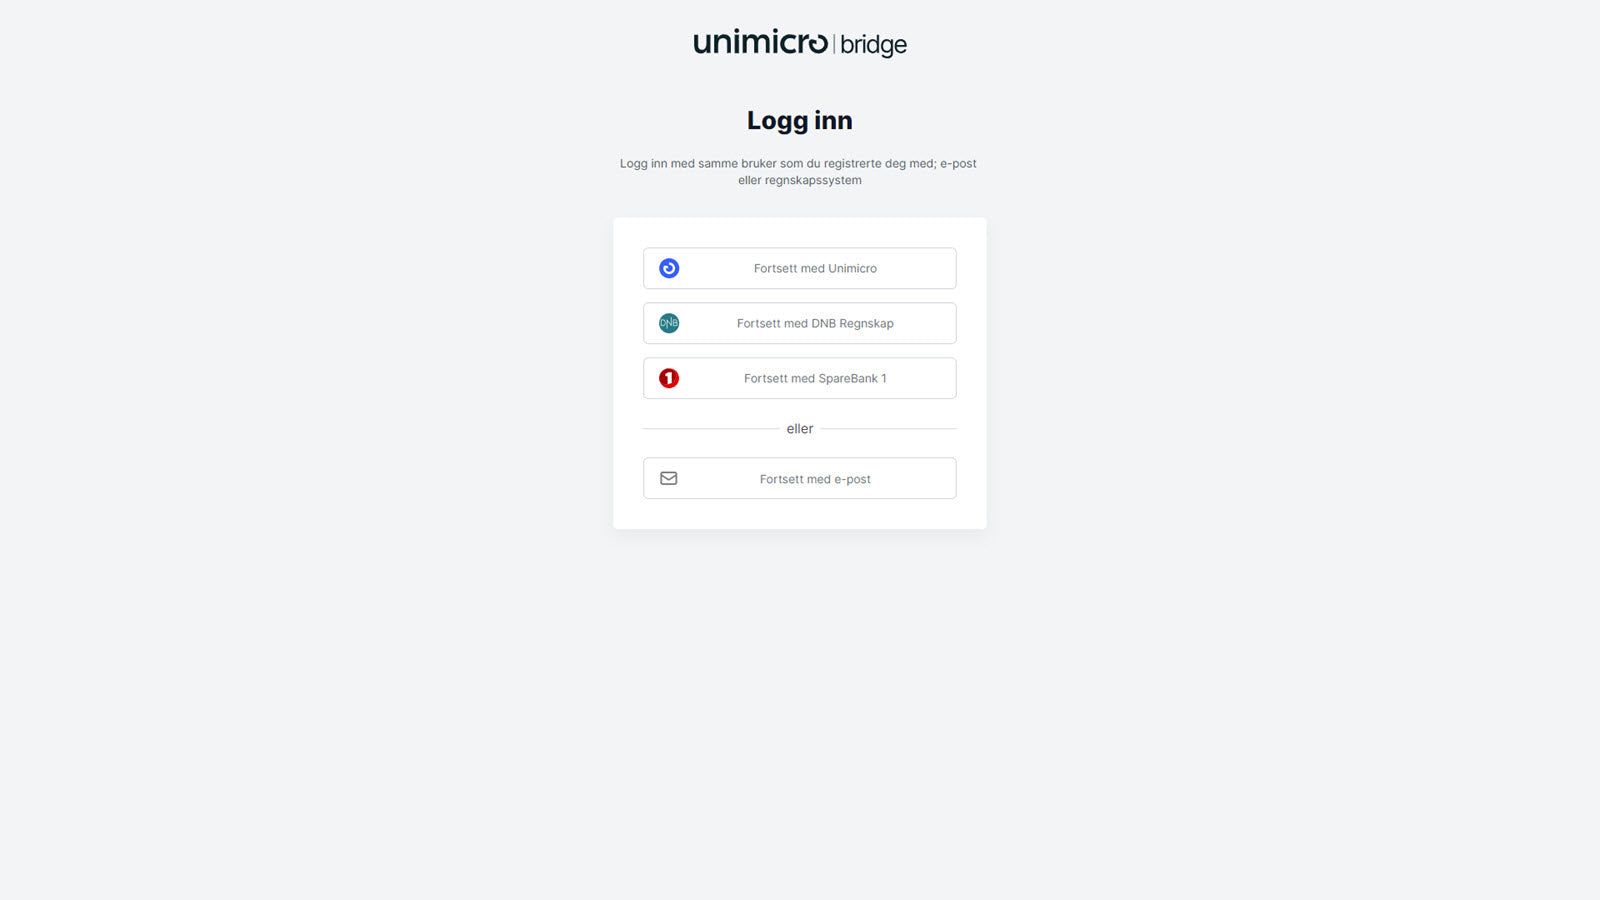 Unimicro Bridge - Logg inn